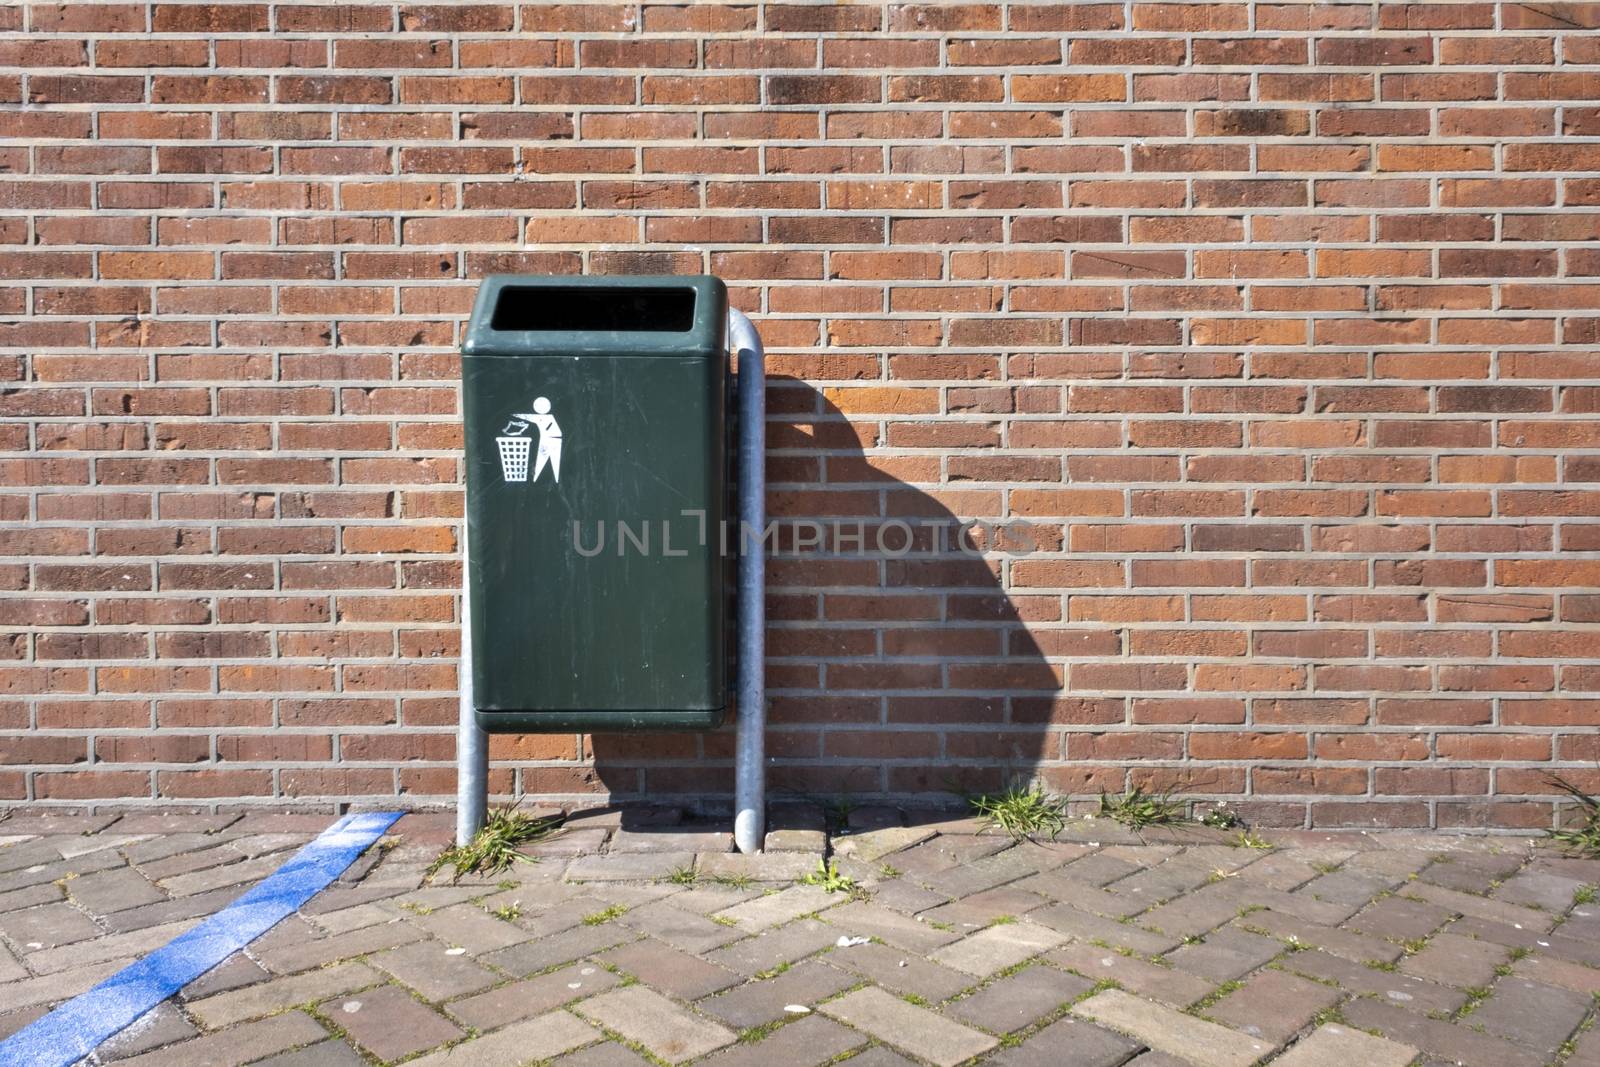 Modern green Metallic trash bin in a sunny urban environment by Tjeerdkruse